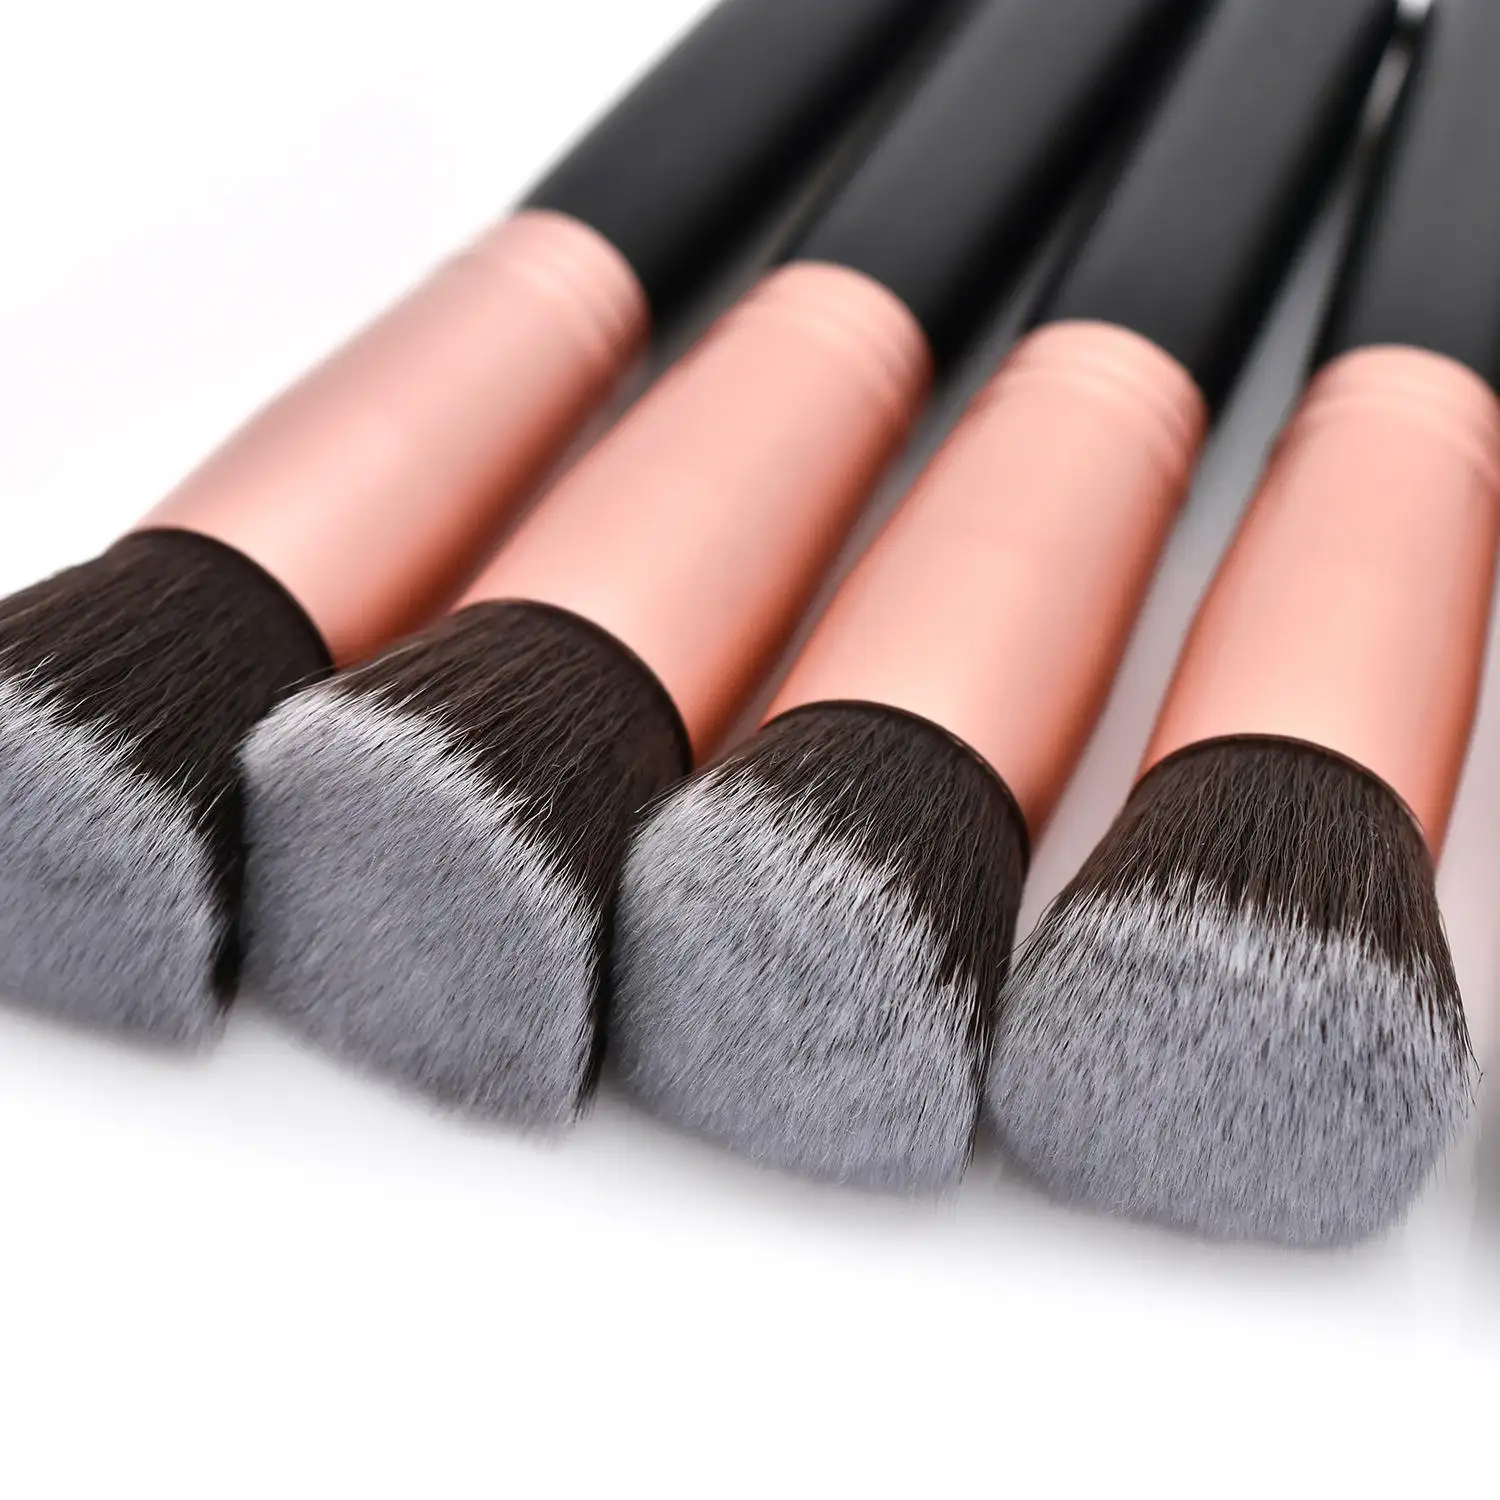 Eval Makeup Brush Set 18 Pcs Premium Synthetic profesional make up brushes Foundation Powder Eye shadows Blush